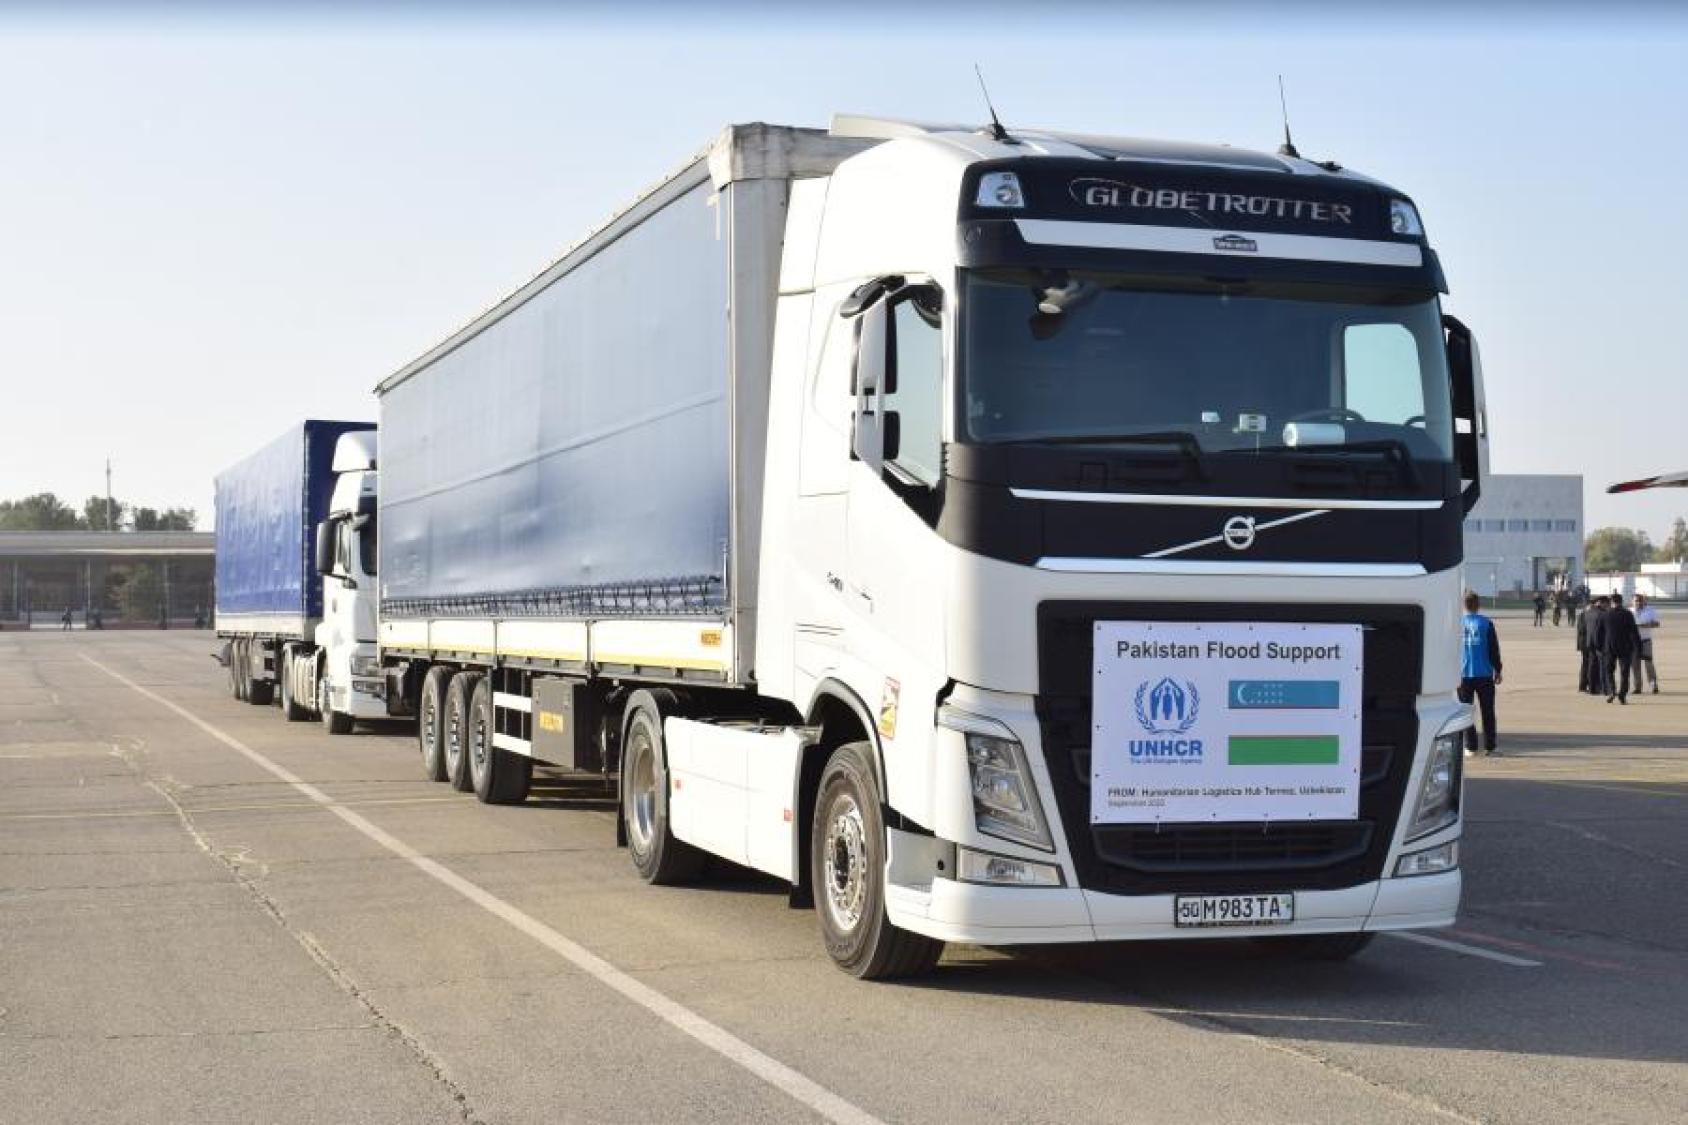 Column of World Food Programme trucks on the road